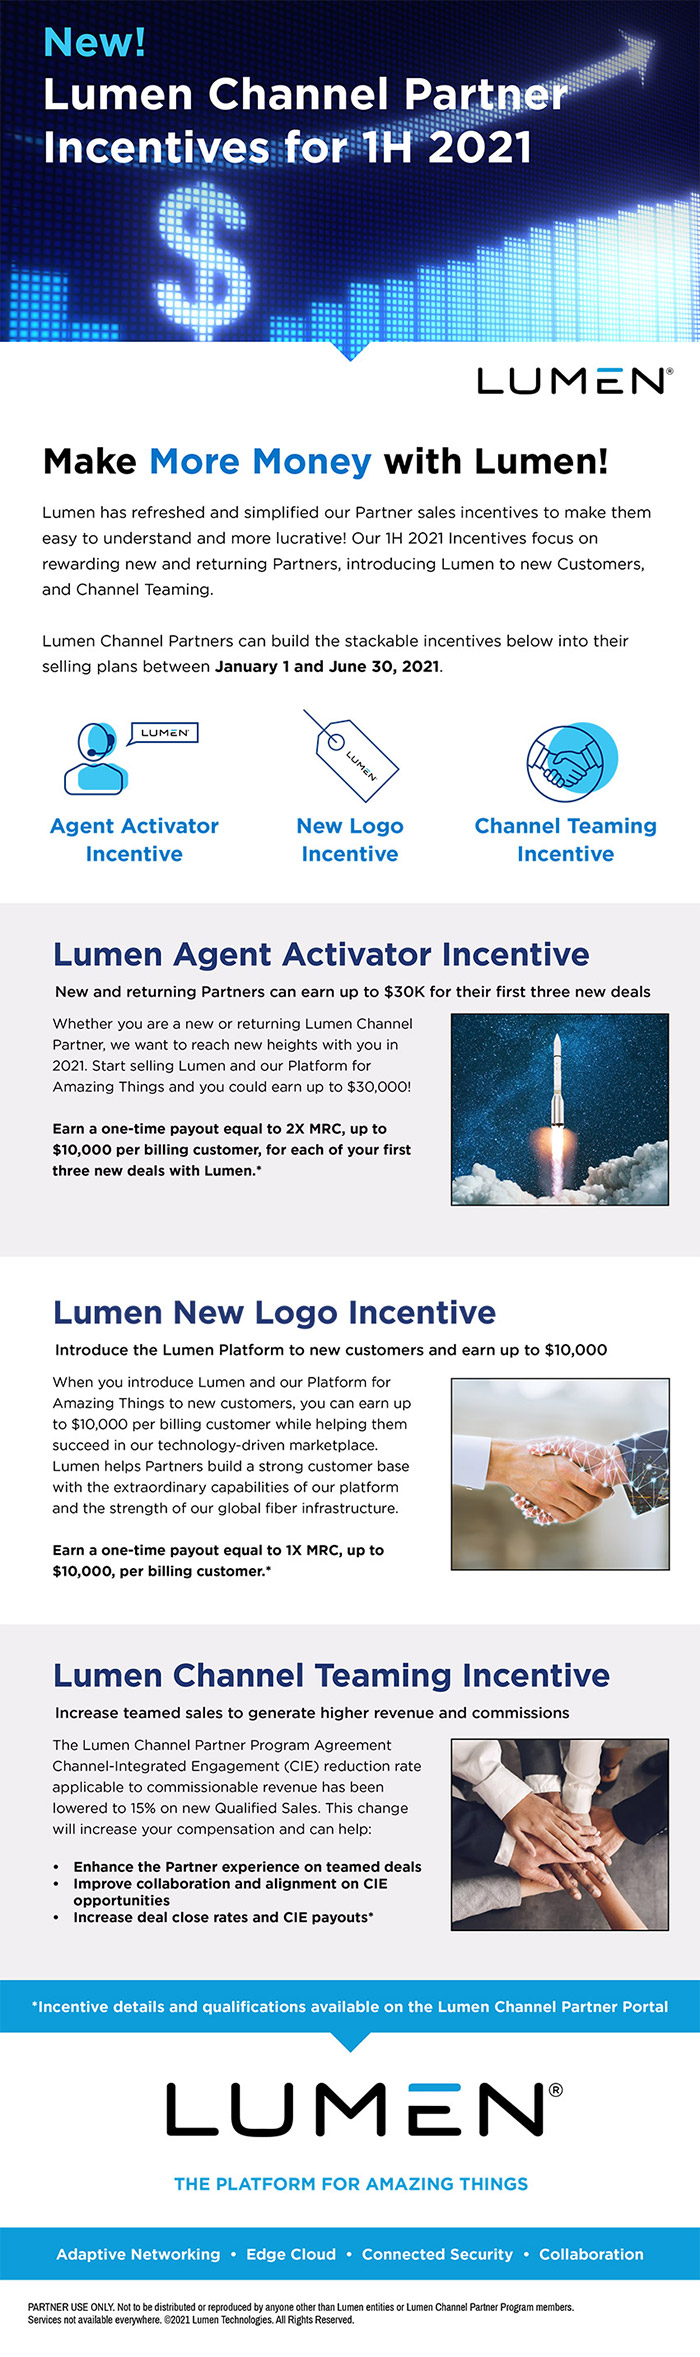 New! Lumen Channel Partner Incentives for 1H 2021